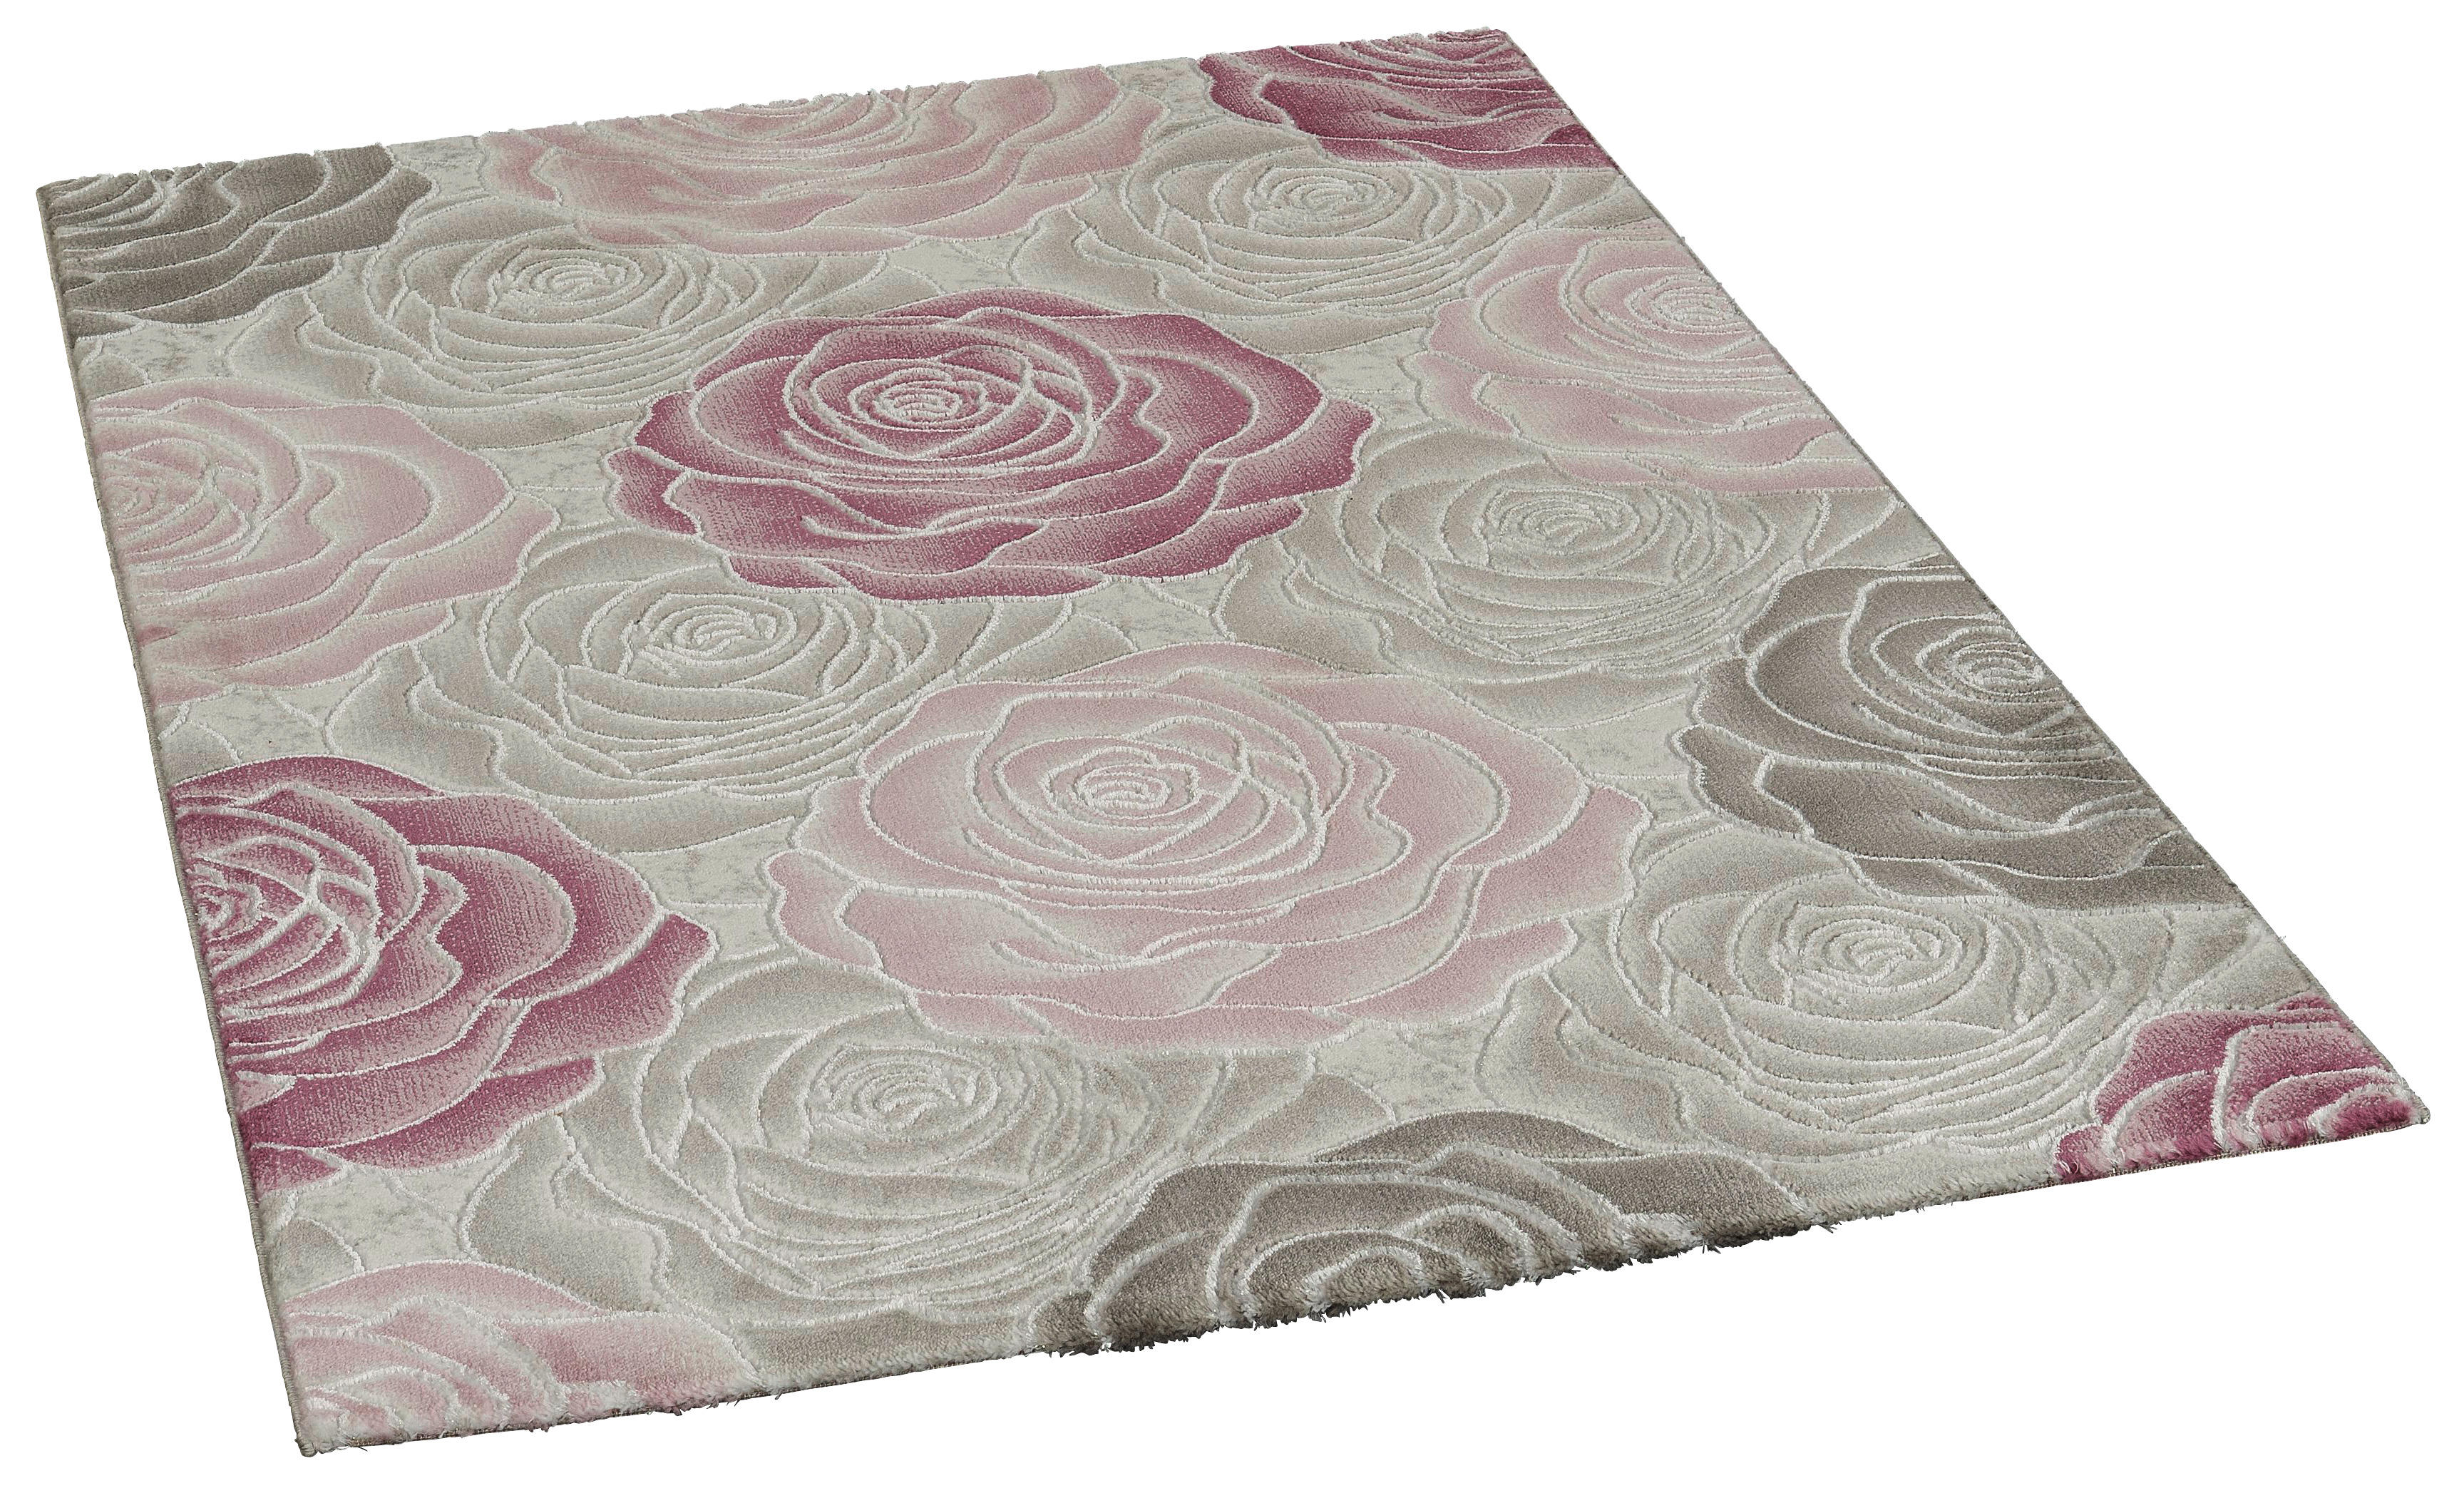 Webteppich Saphir rosa B/L: ca. 120x170 cm Saphir - rosa/grau (120,00/170,00cm)